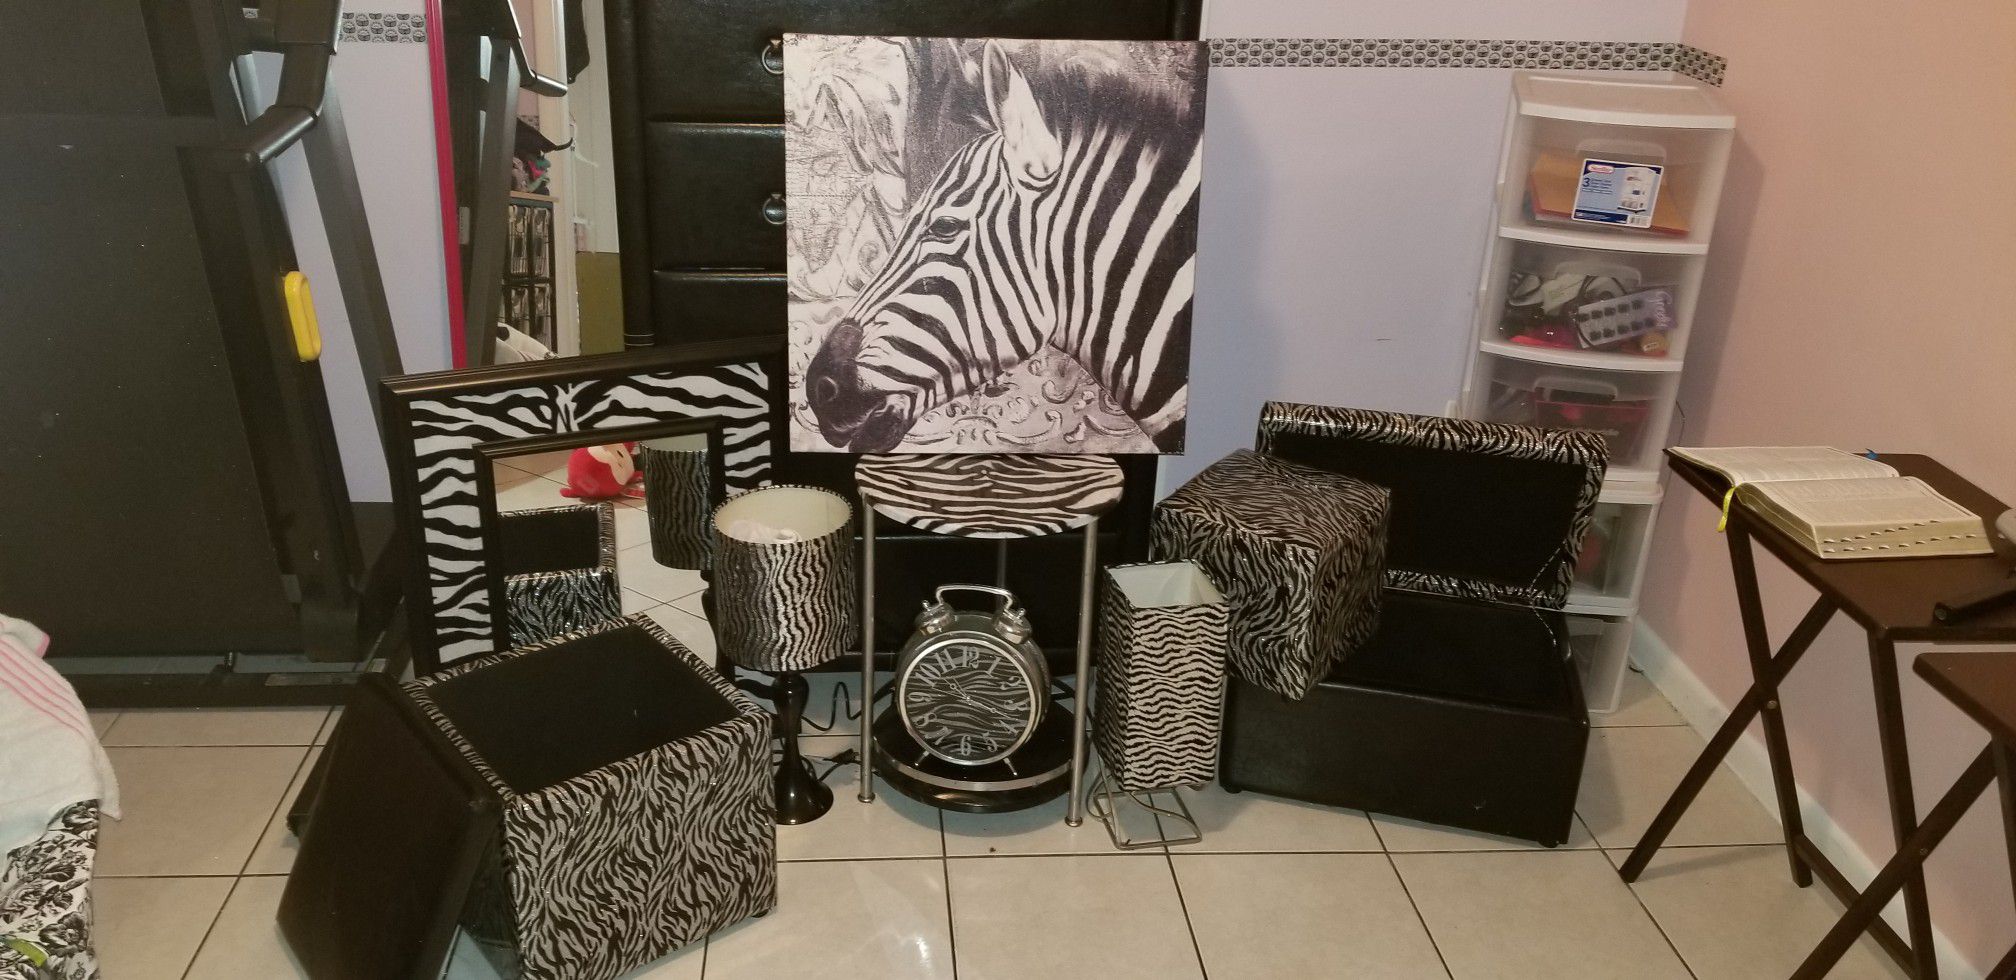 Zebra decoration